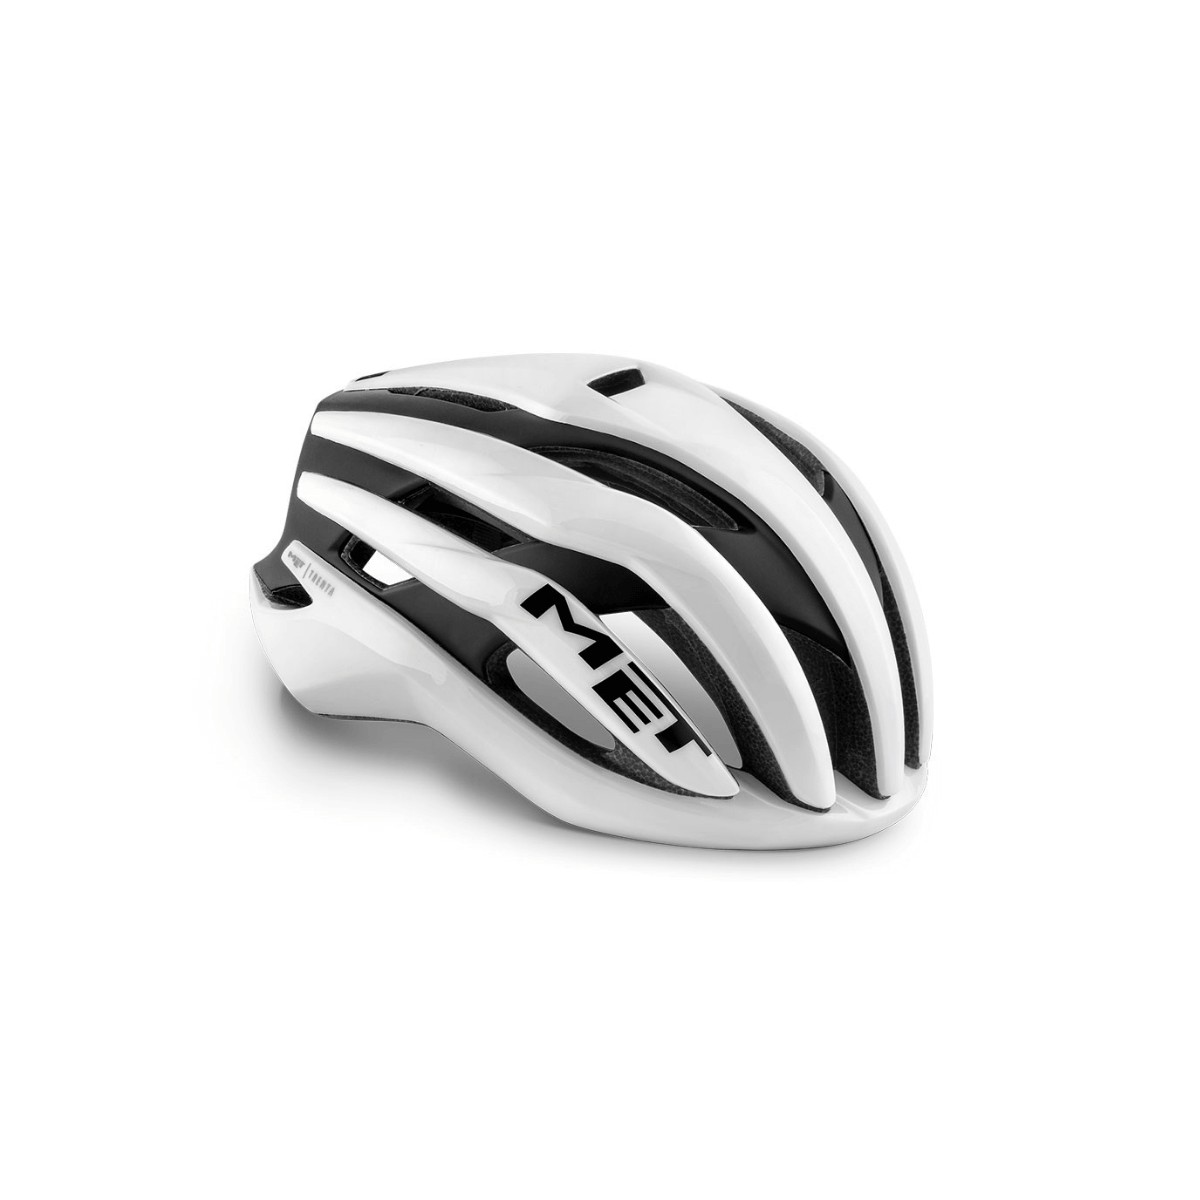 Met Trenta Mips Helmet White Black, Size S (52-56 cm)